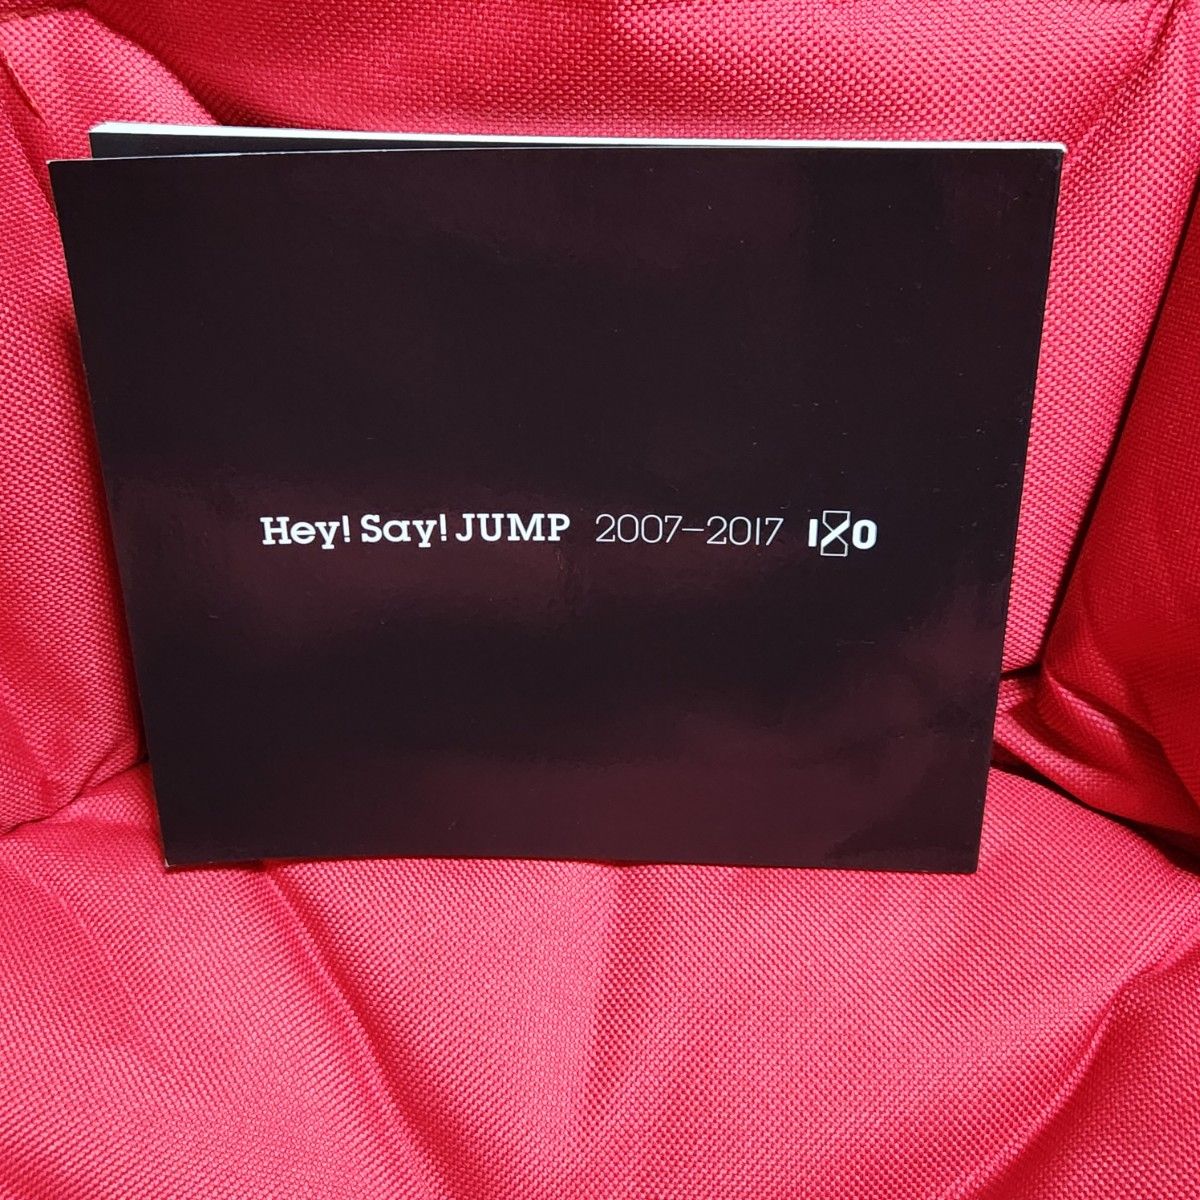 Hey! Say! JUMP 2007-2017 I/O (初回限定盤2)